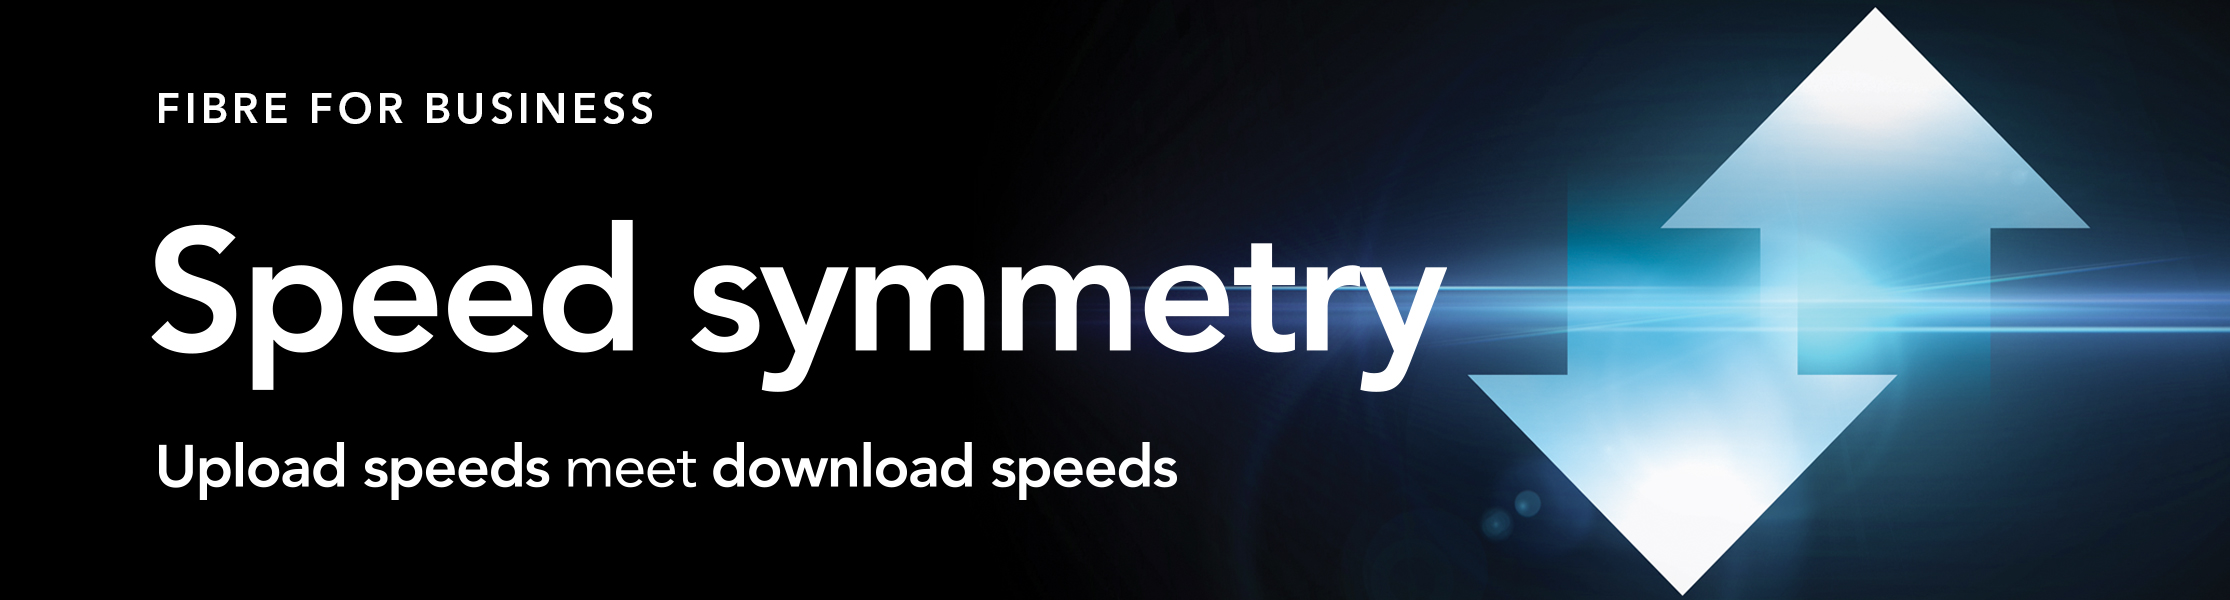 Speed symmetry